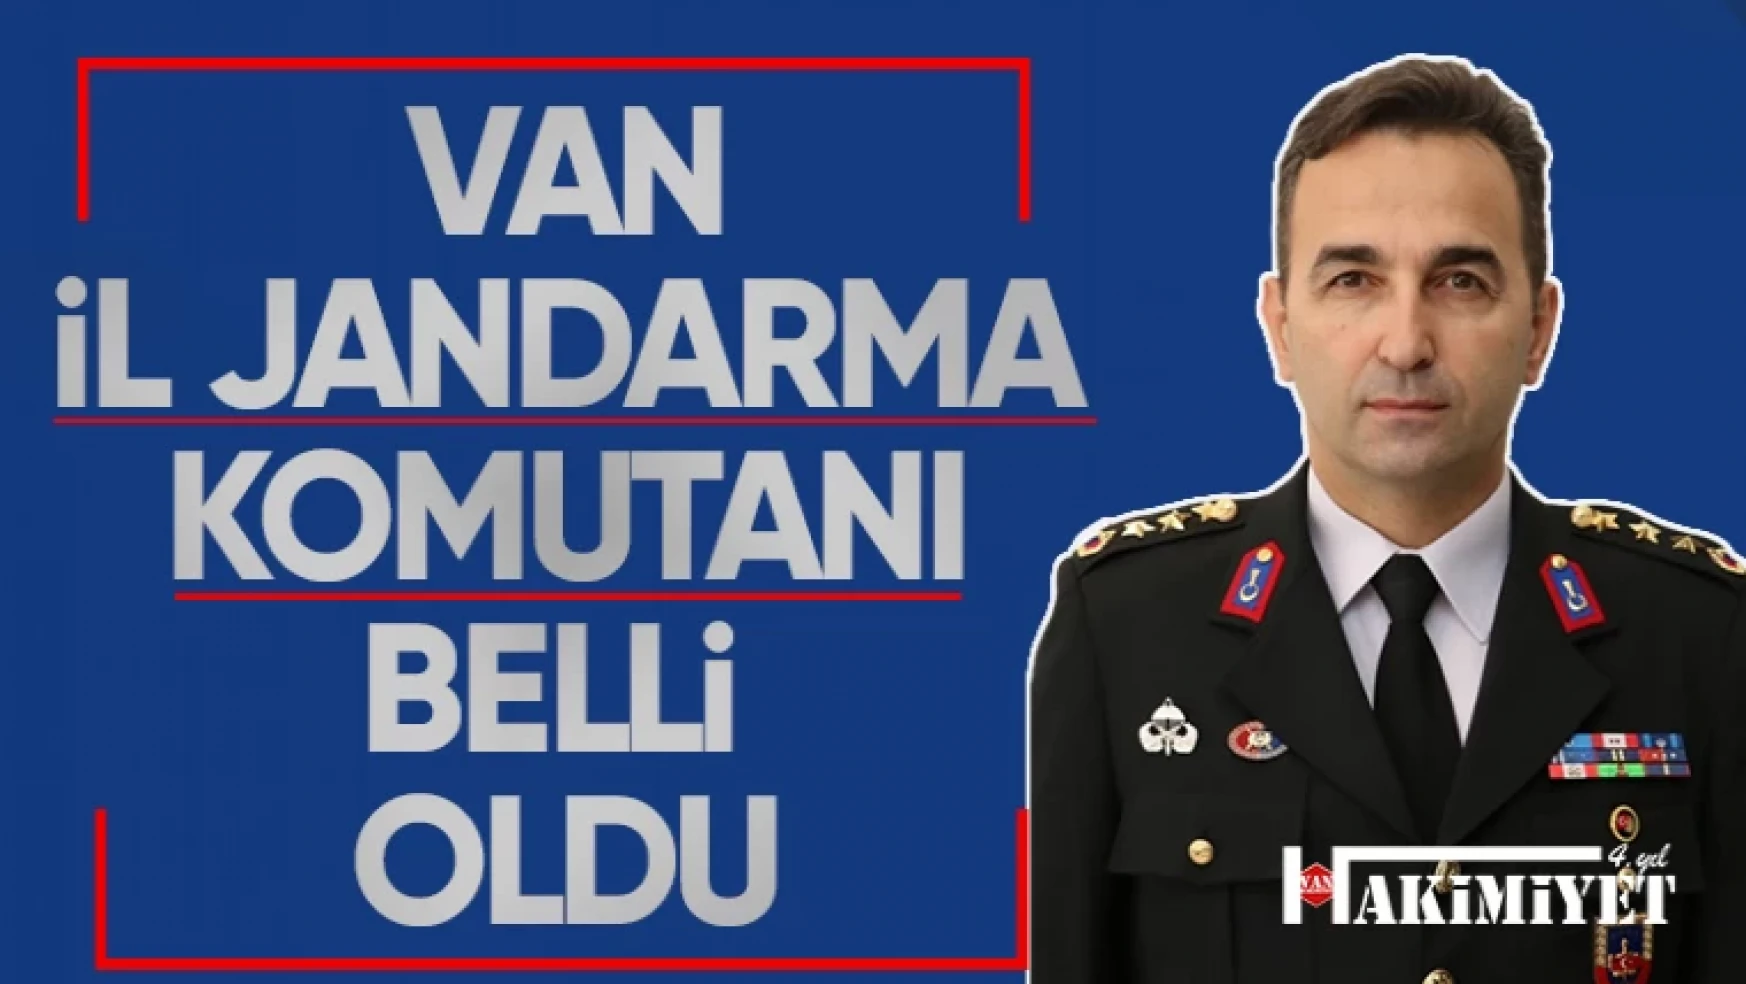 Van İl Jandarma Komutanı belli oldu